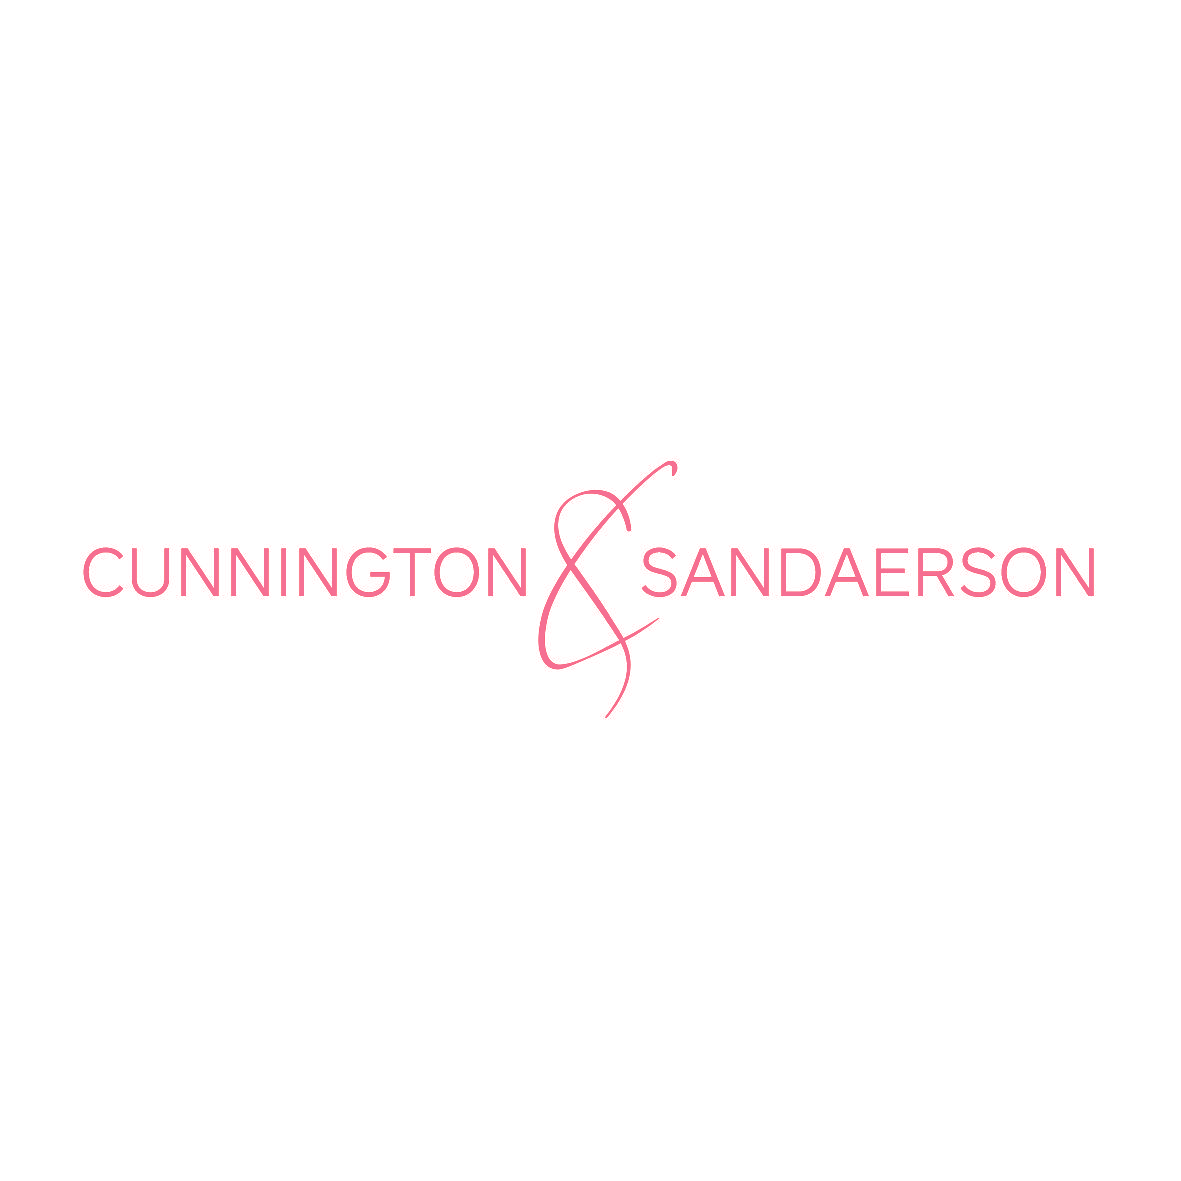 CUNNINGTON & SANDAERSON